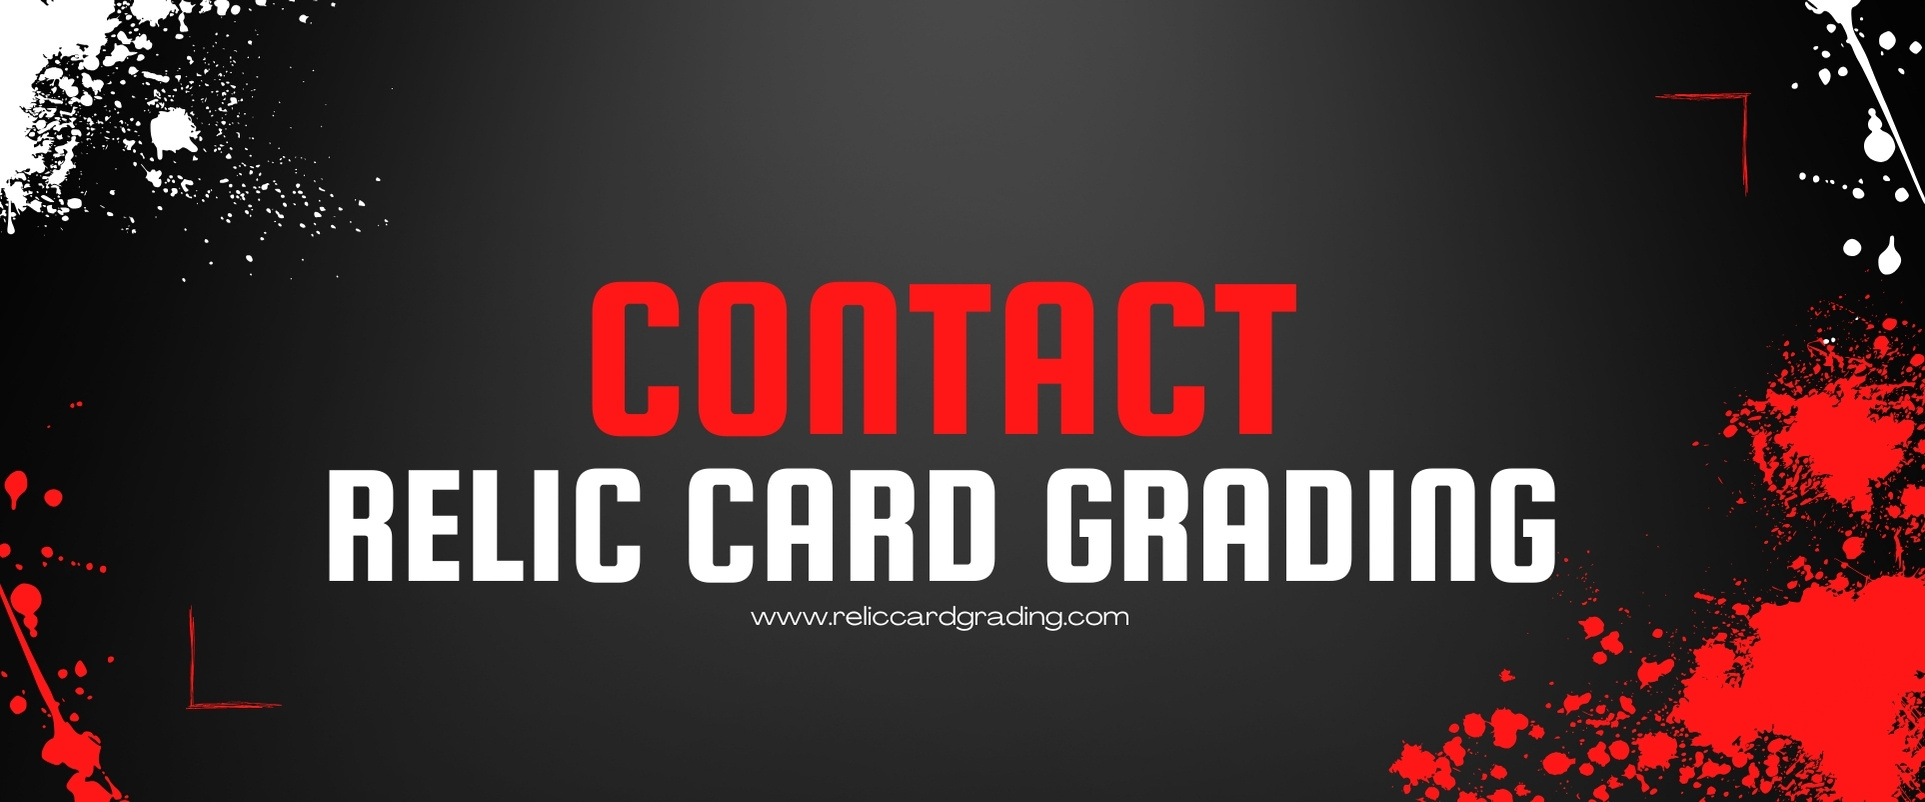 Contact Relic Card Grading